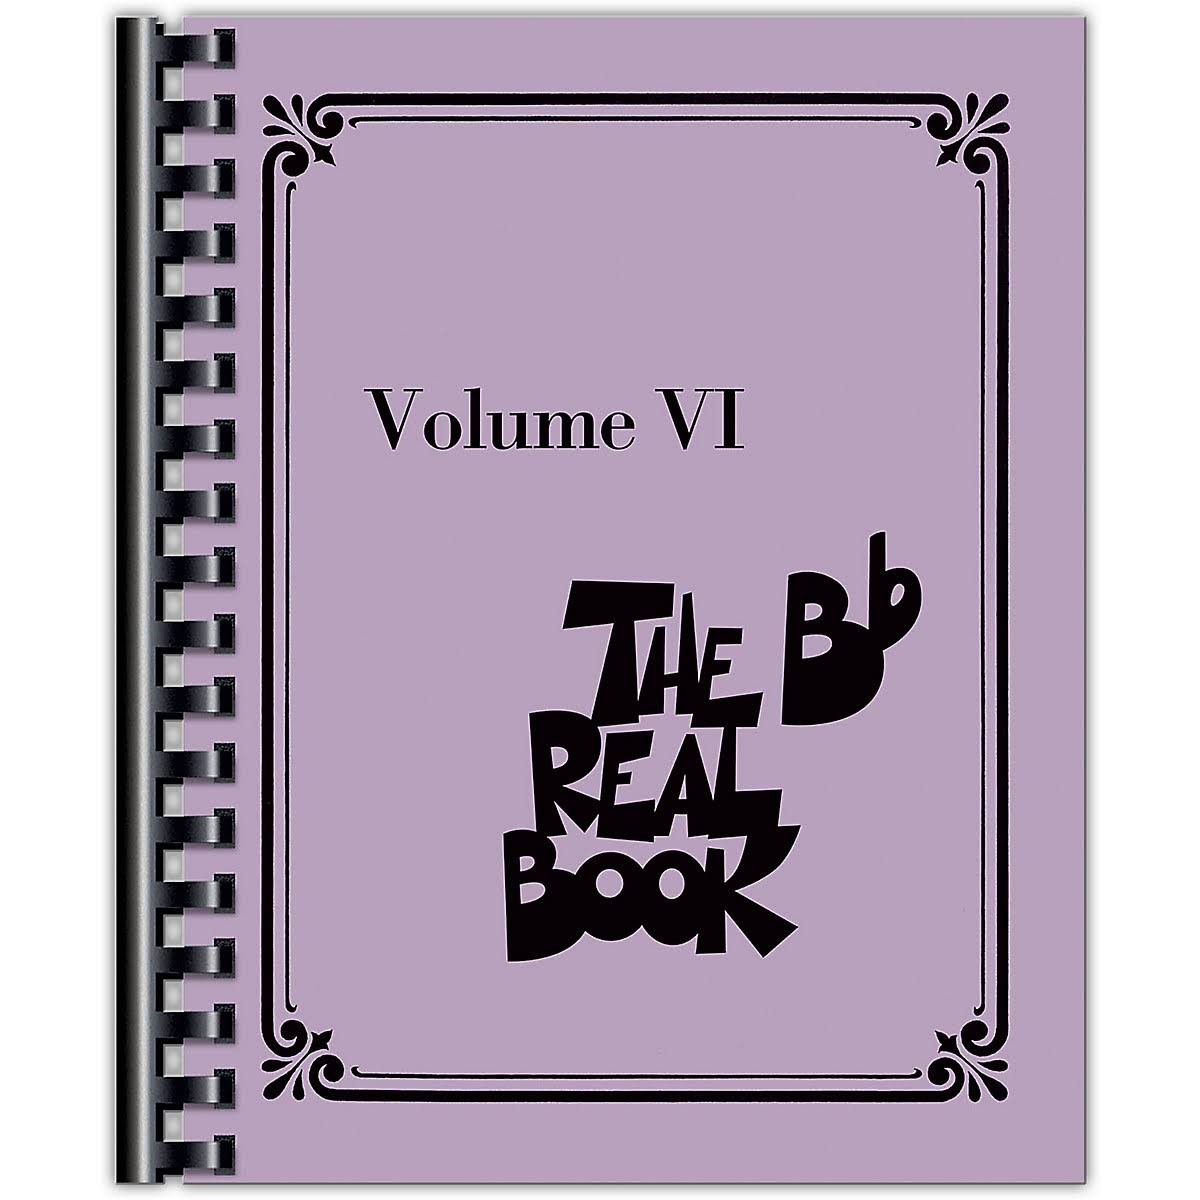 Hal Leonard The Real Book Volume VI - B-flat Instruments